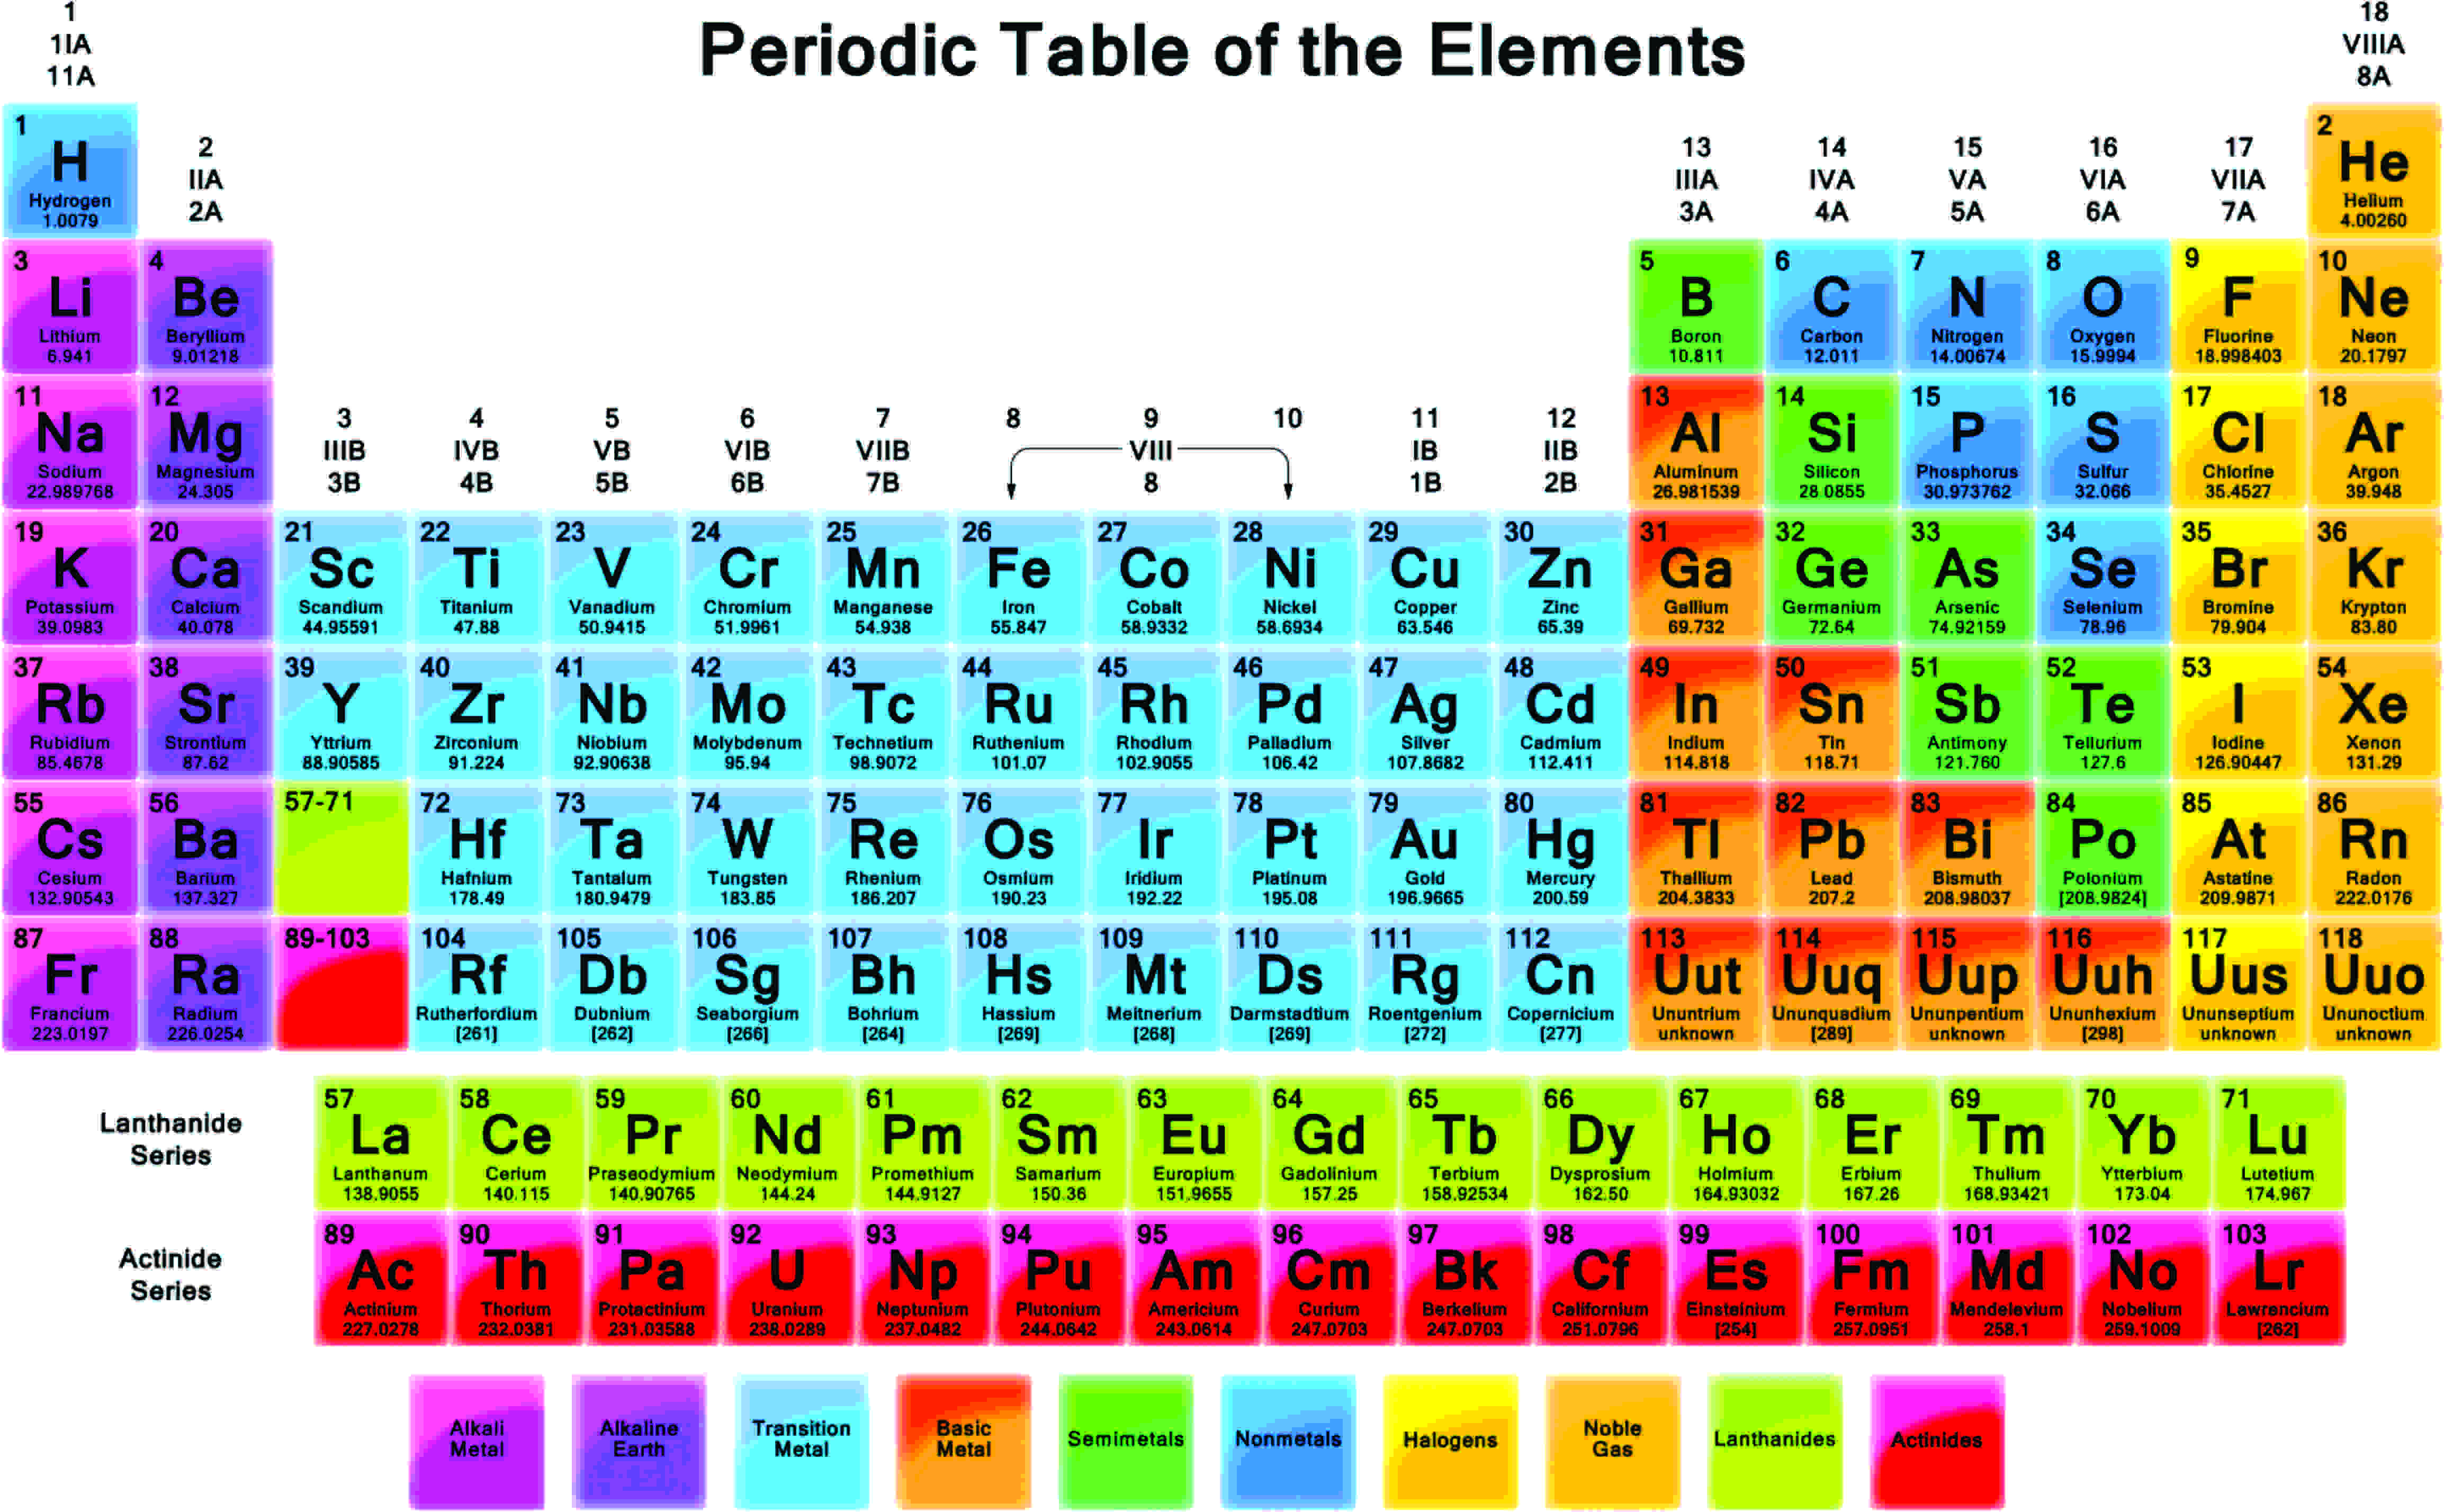 http://likesuccess.com/topics/22345/periodic-table